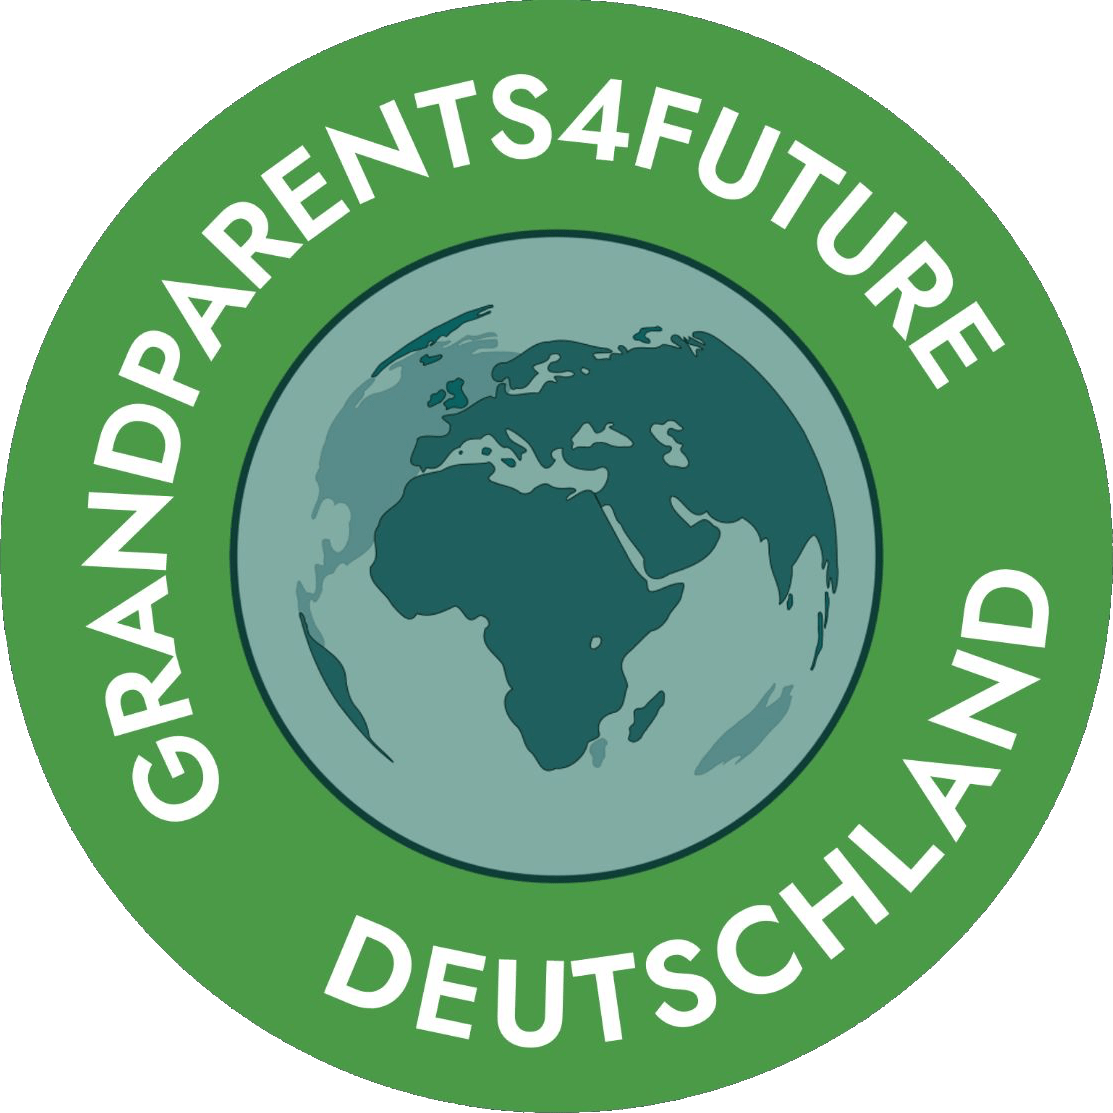 Grandparents For Future